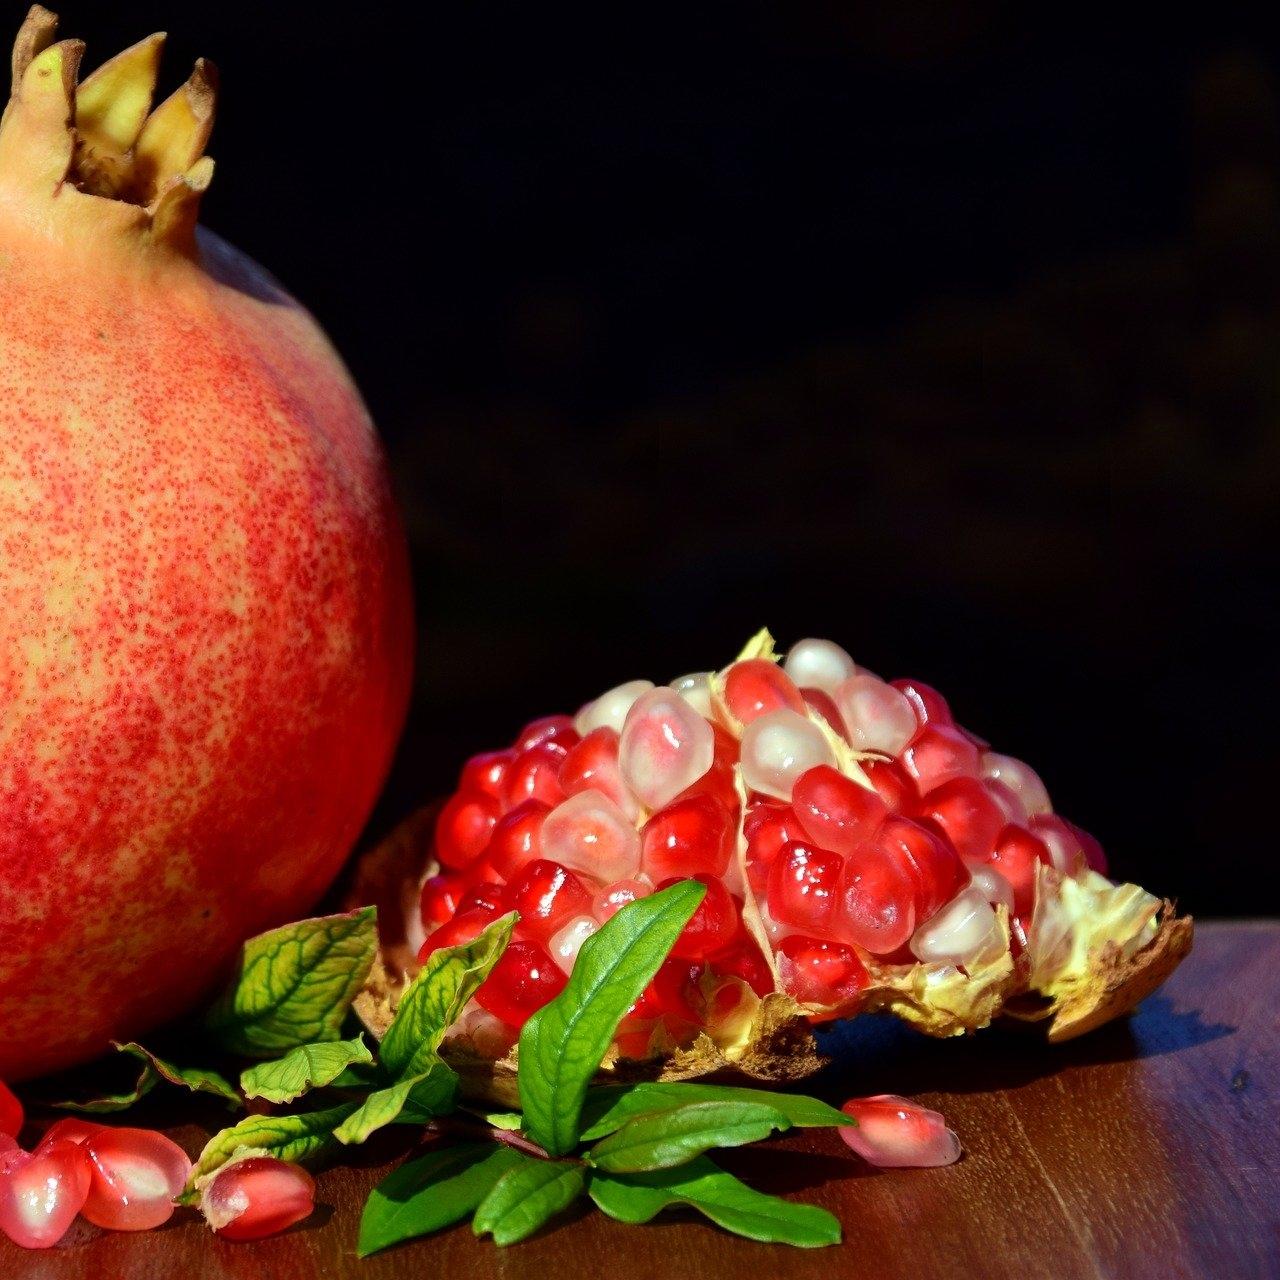 One pomegranate